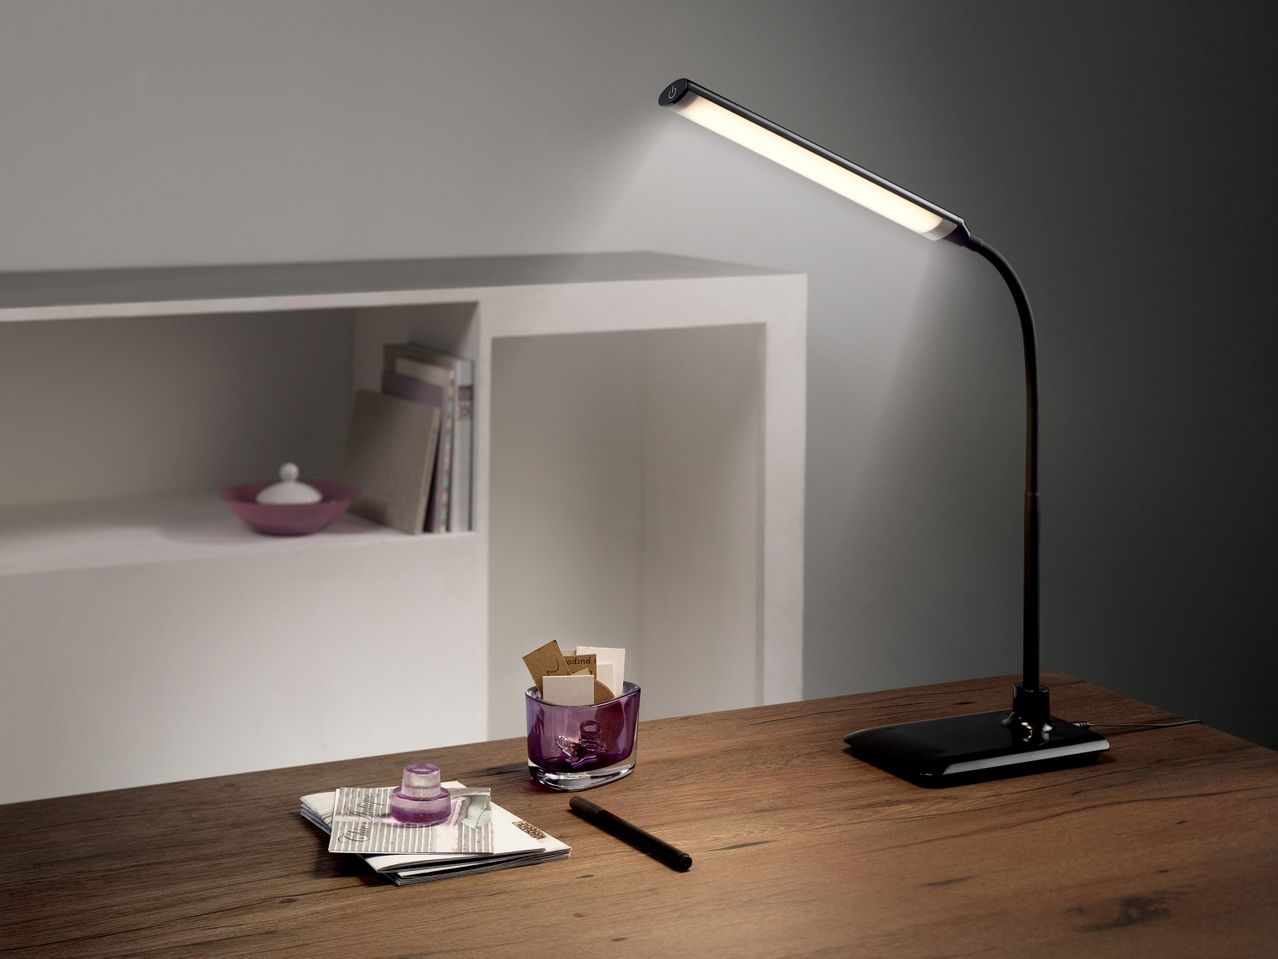 Lampada LED da tavolo o con morsetto , prezzo 14,99 EUR 
Lampada LED da tavolo o ...